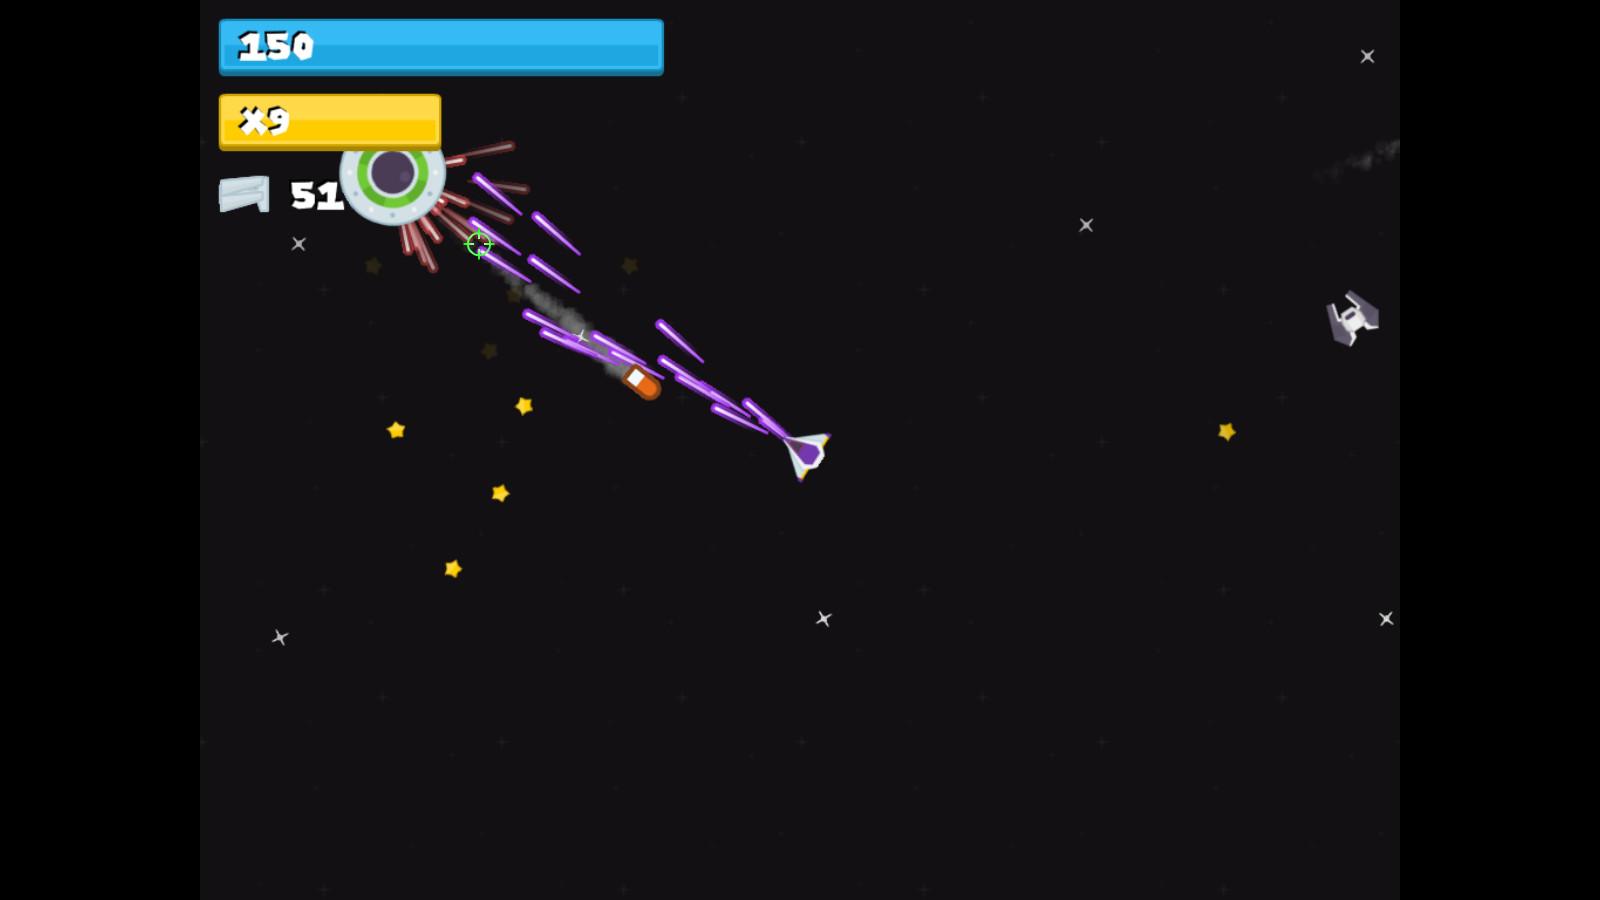 Screenshot №3 from game Gal-X-E